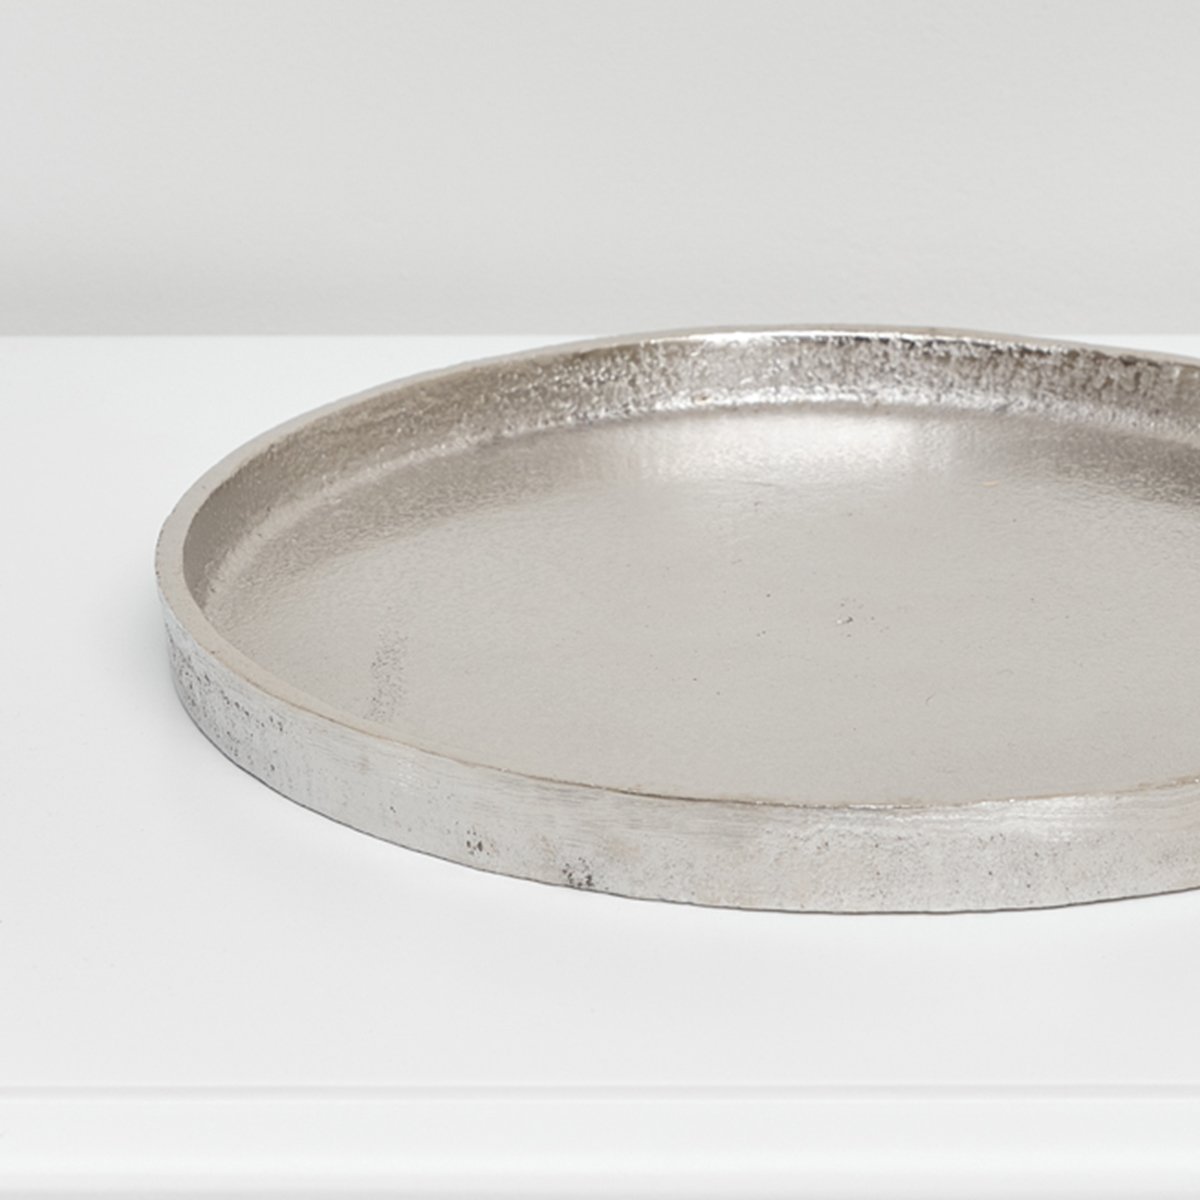 Medium Round Silver Metal Tray - 25.5cm